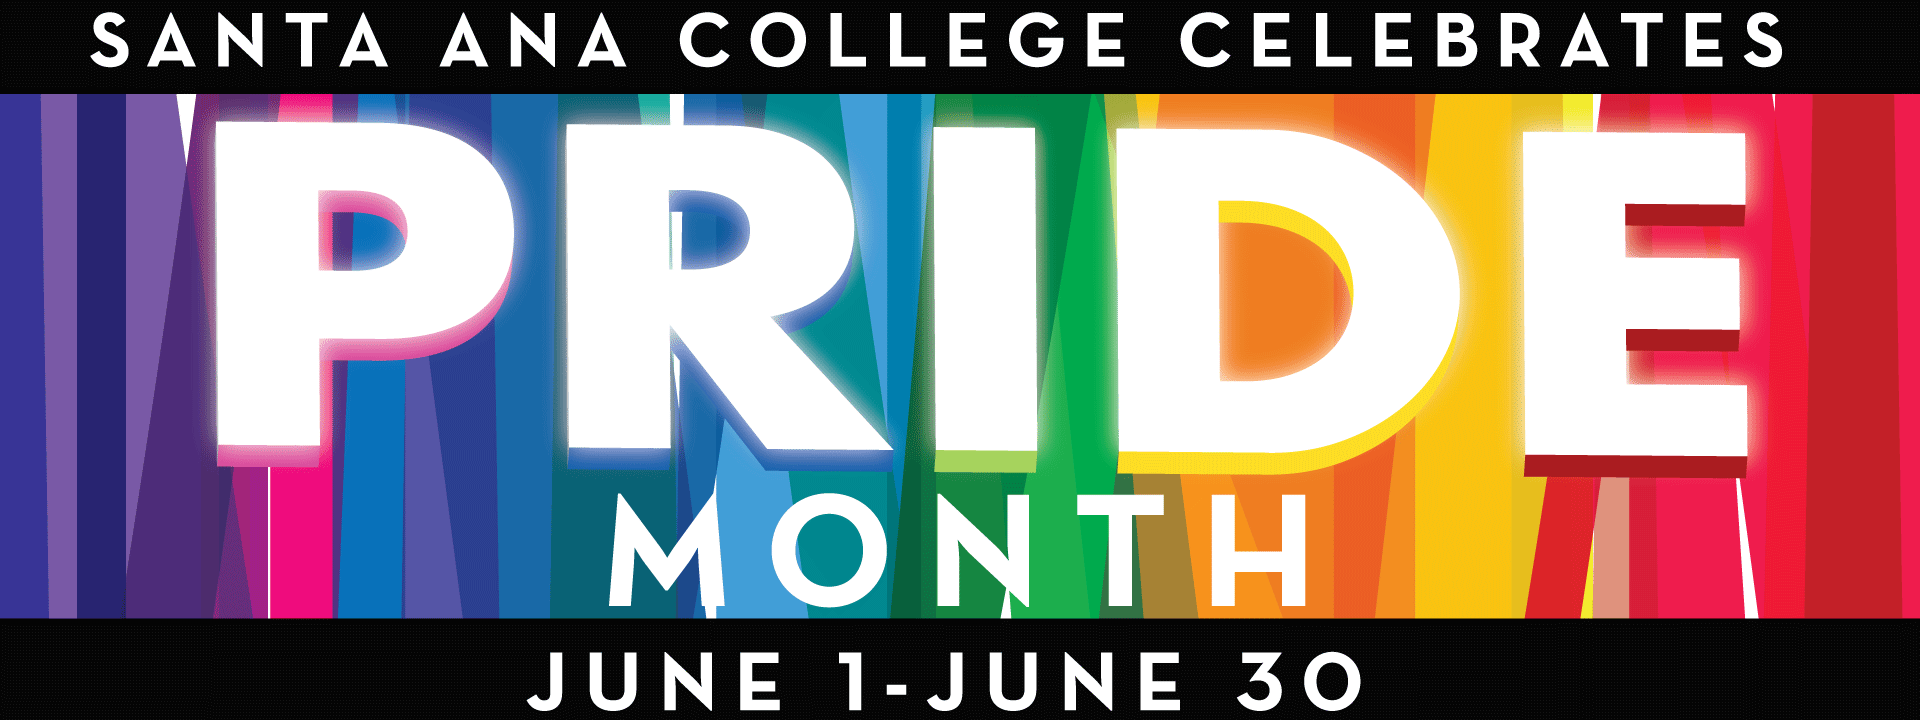 Santa ana college celebrates Pride Month